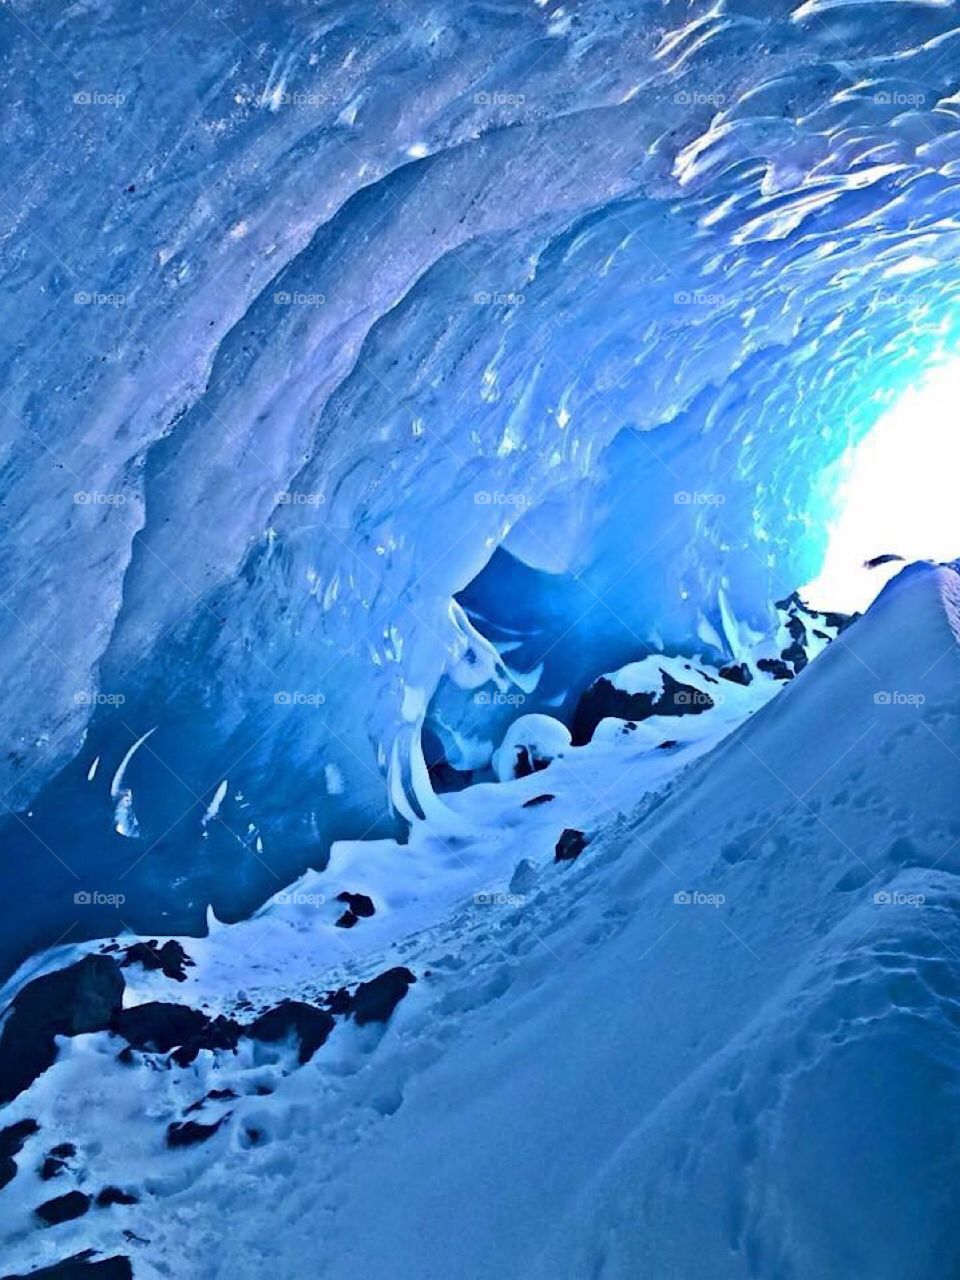 Alaskan Ice Caves